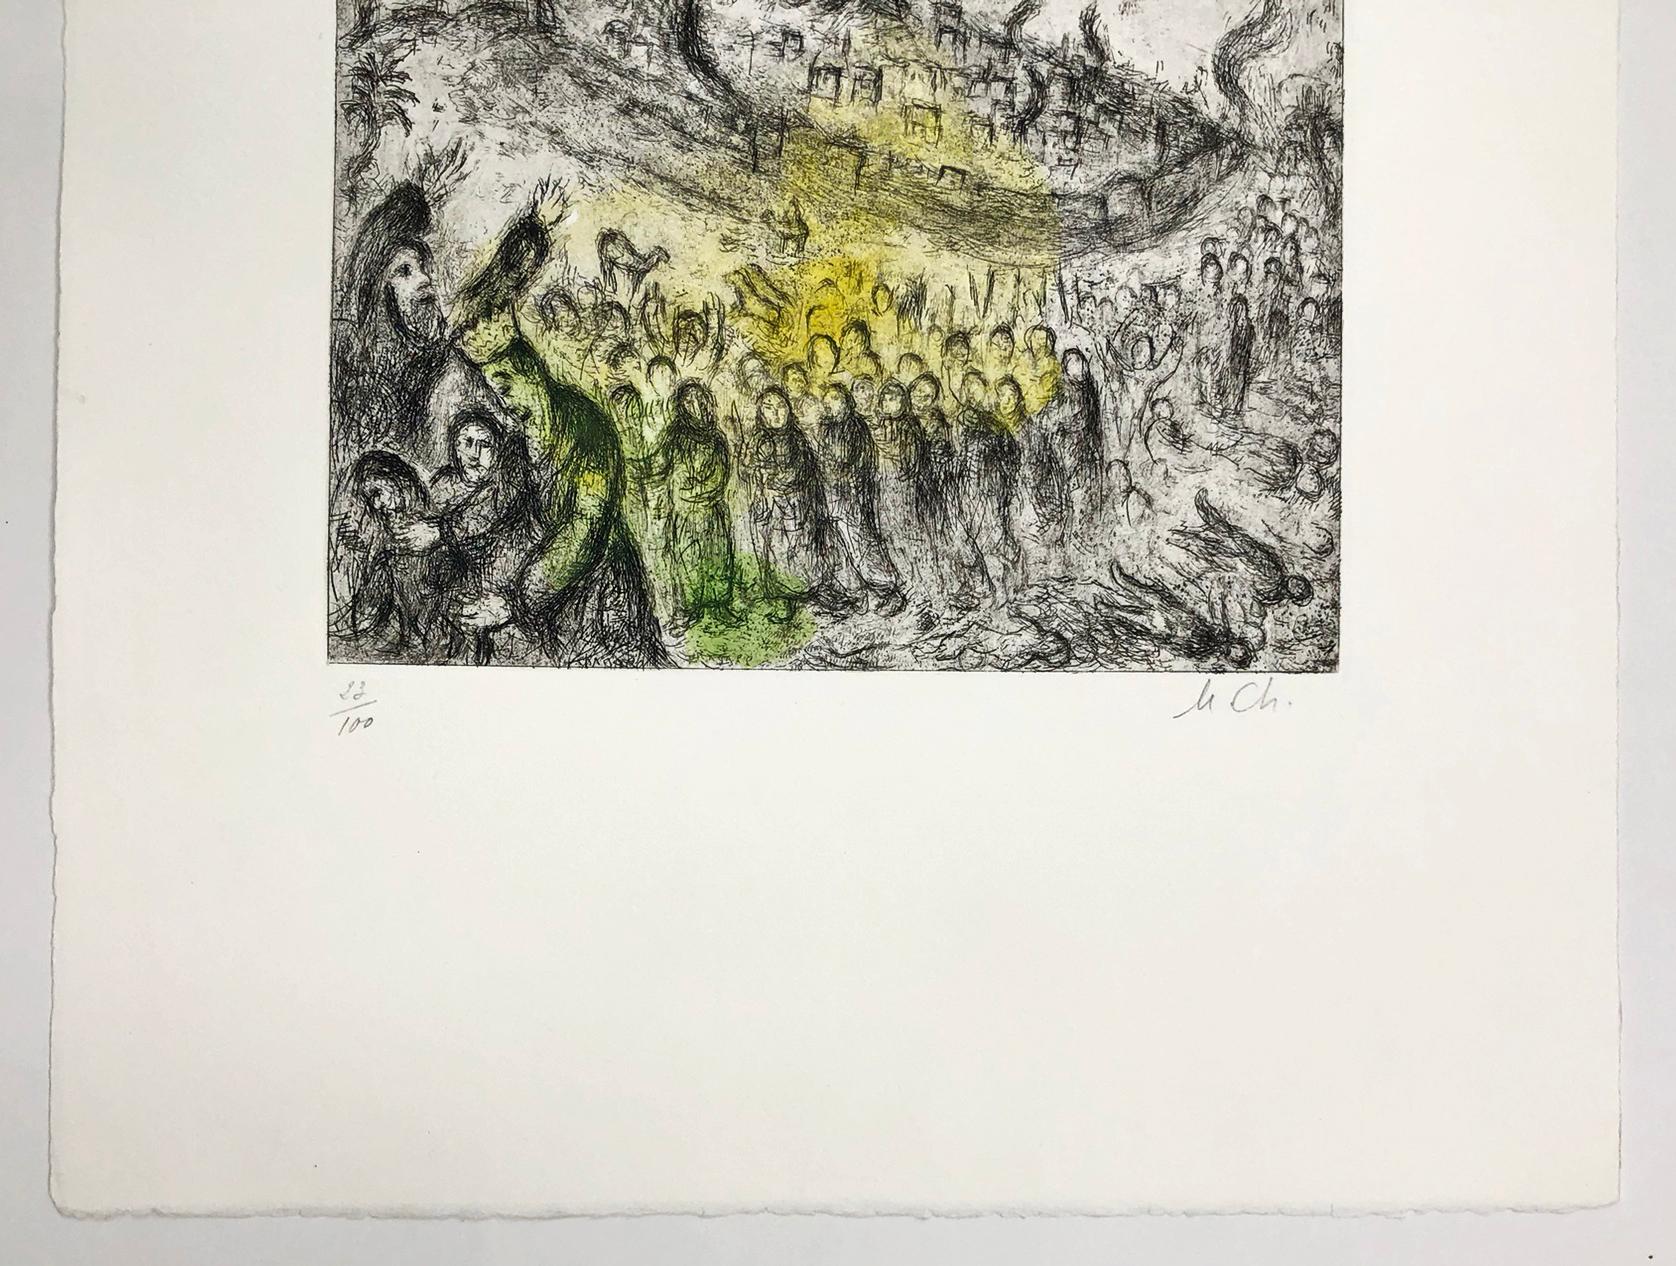 PRISE DE JERUSALEM (CRAMER 30) - Print de Marc Chagall